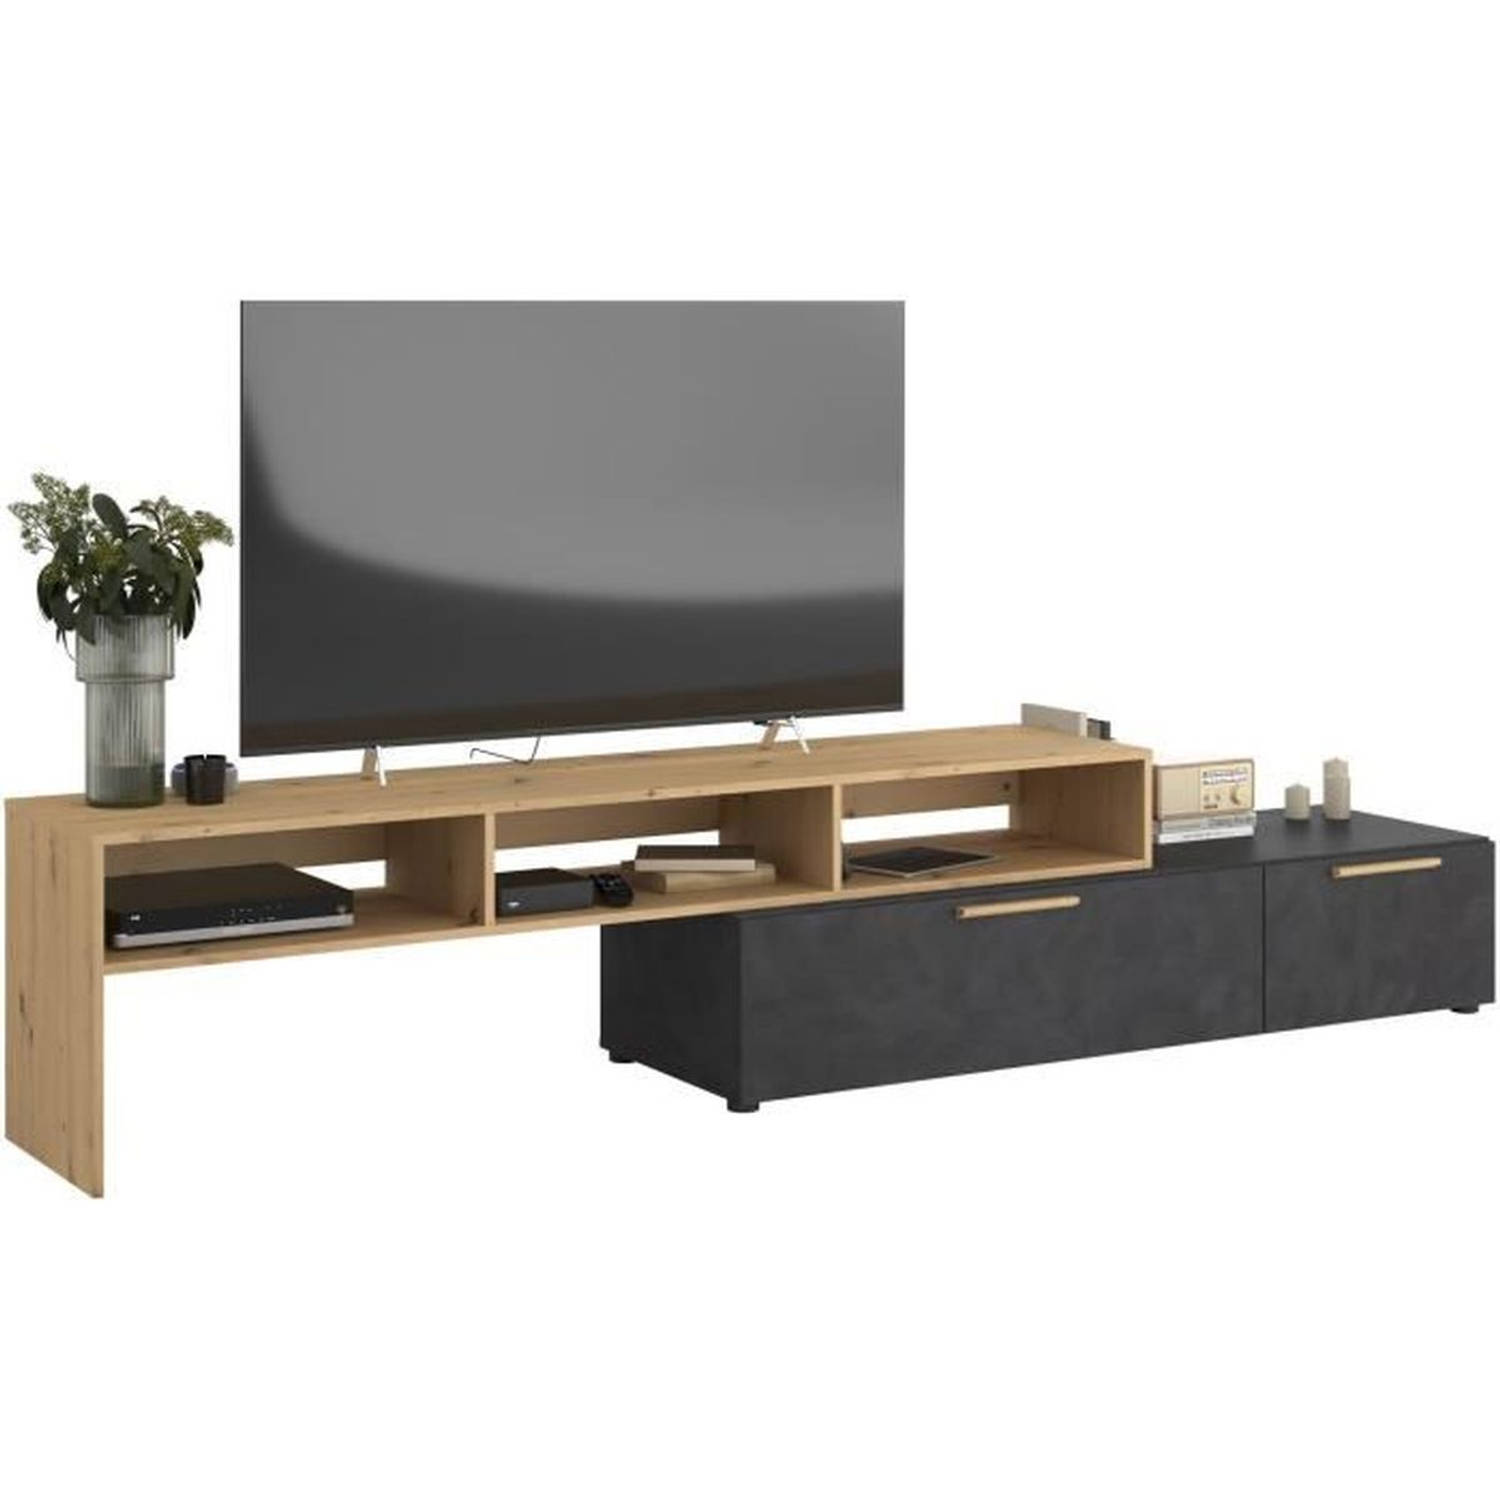 RAW TV-meubel - Decor eiken en Steam Black - 1 klep + 1 lade - 4 modulaties naar keuze - L250 x H 50 x D 46,6 cm